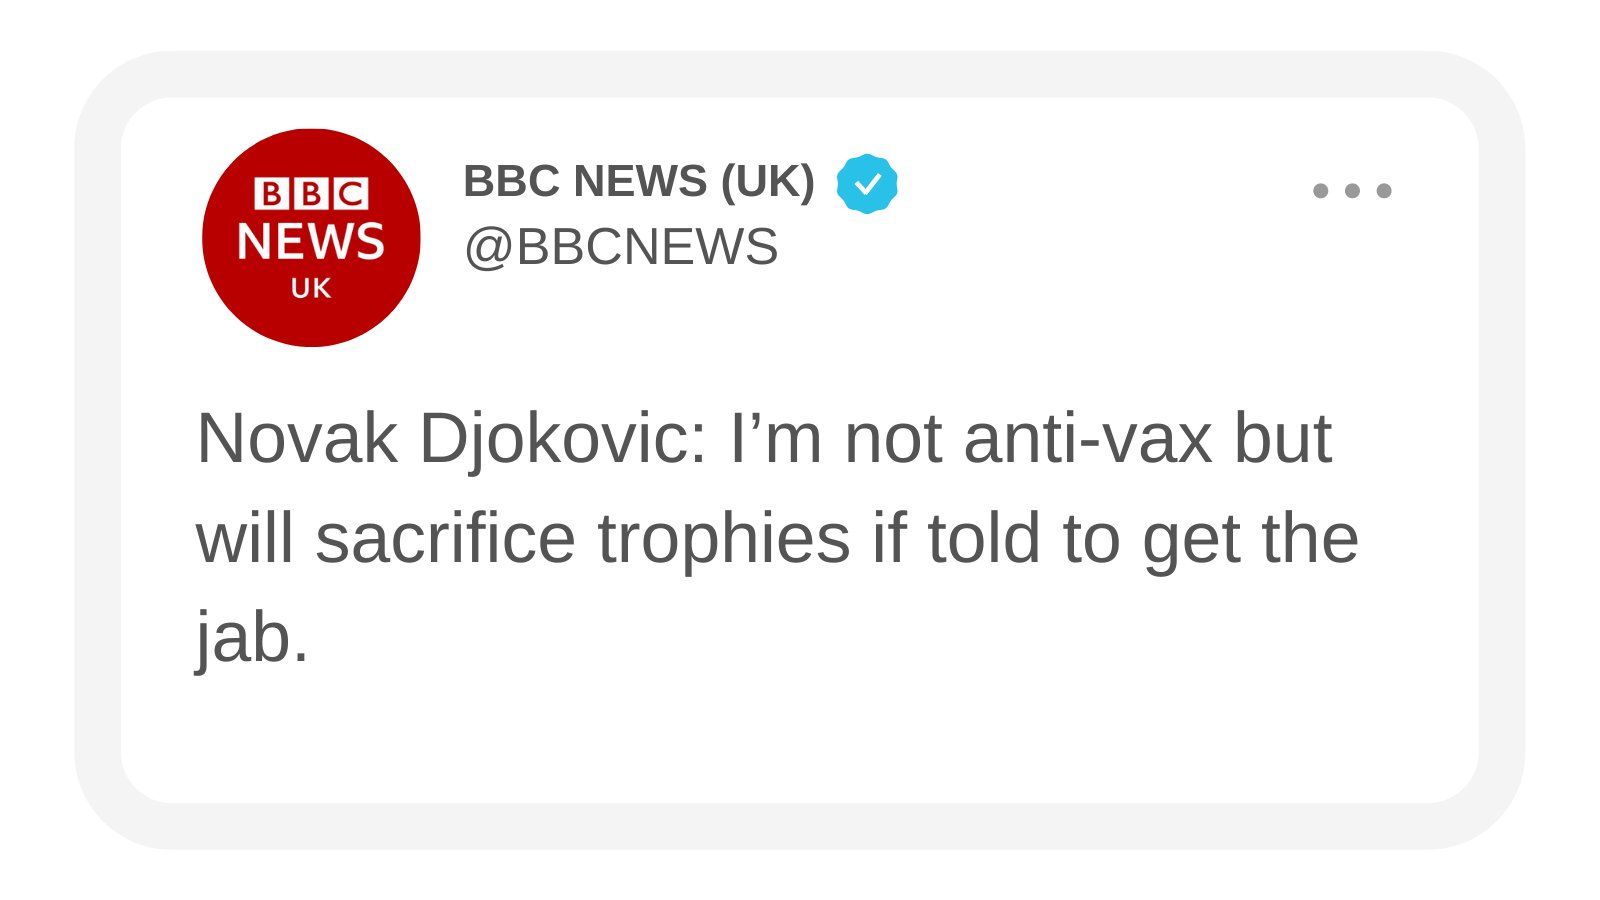 Il tweet di stamattina che lanciava la intervista di Novak